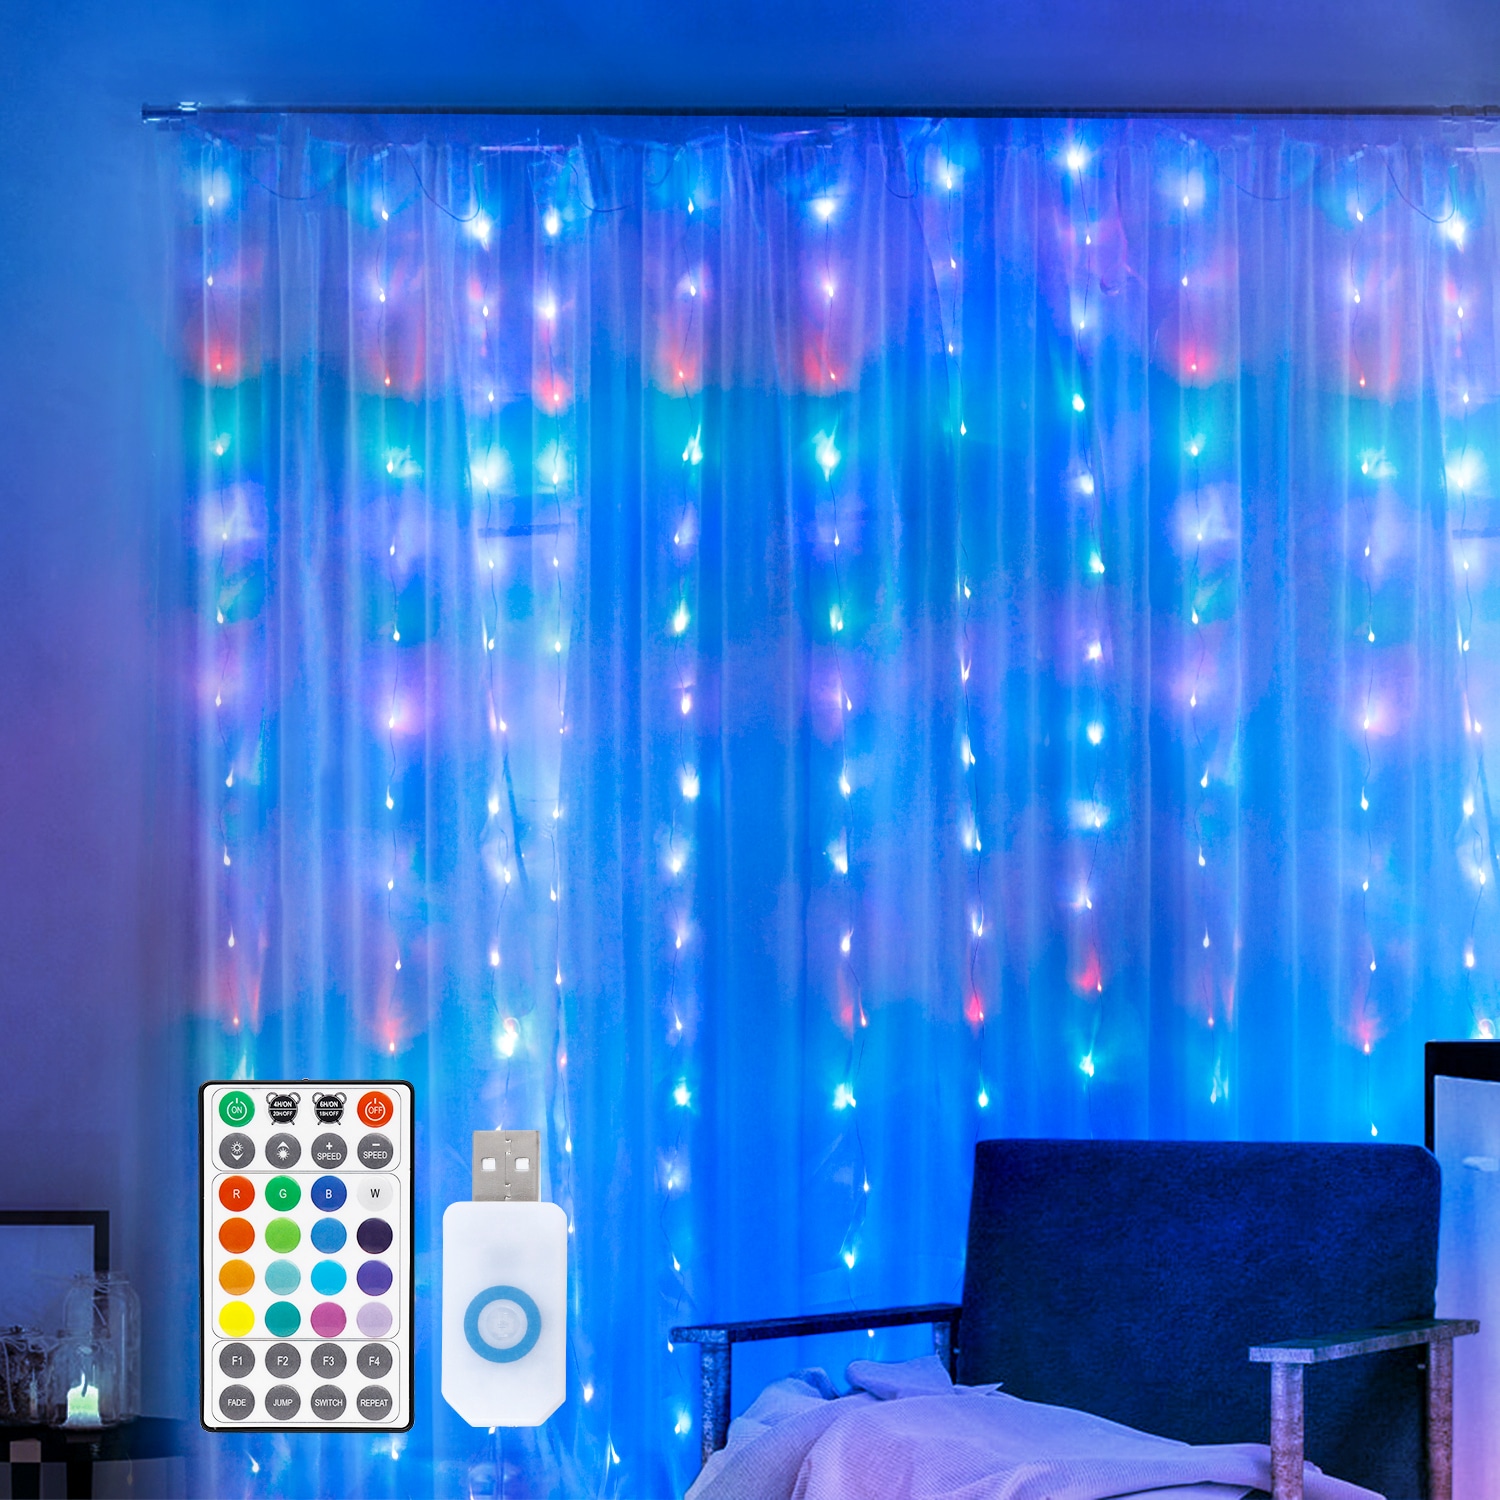 LED Curtain Lights online sale usb remote control